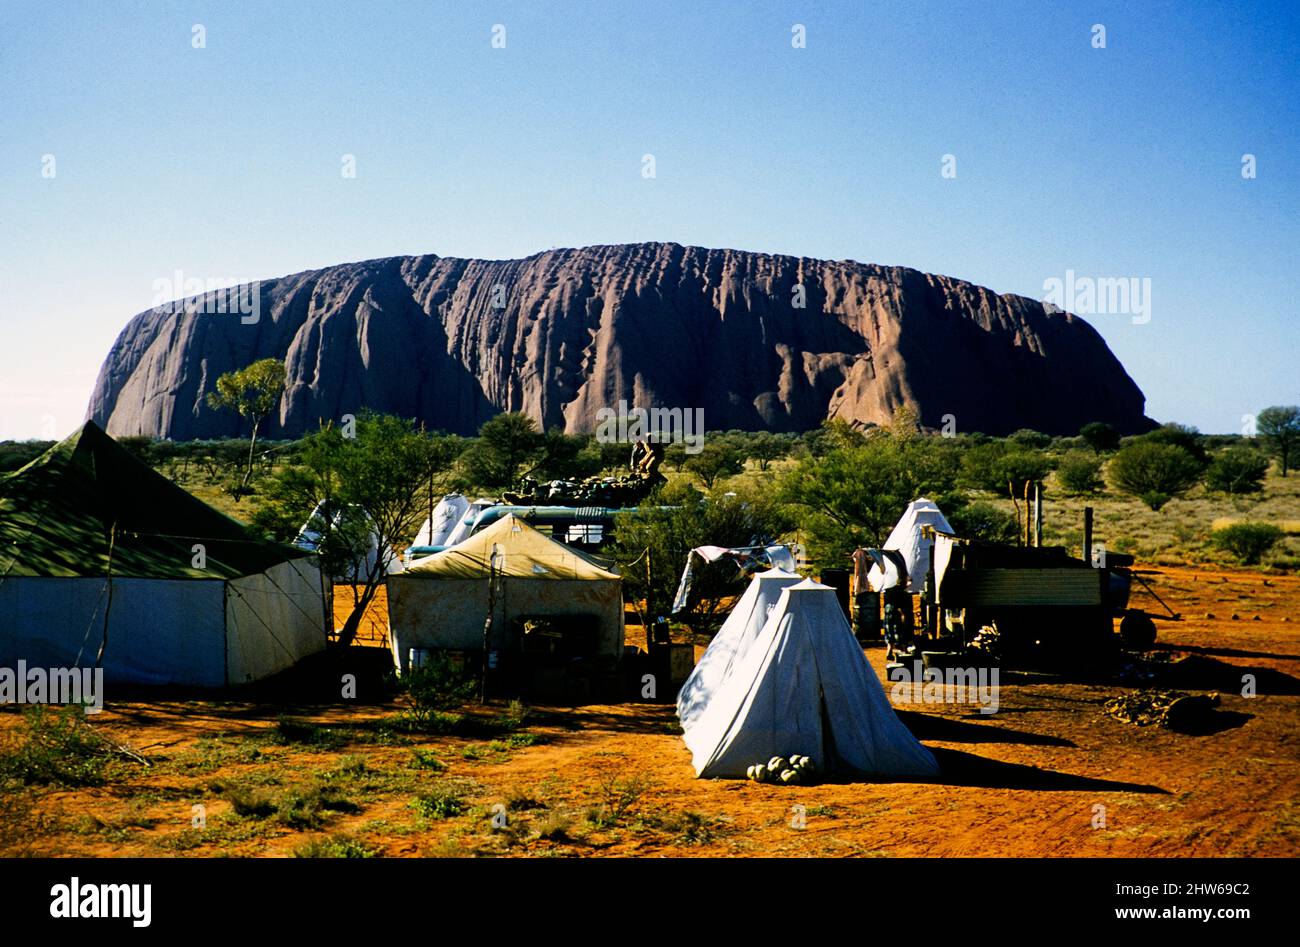 Melbourne Grammar School Expedition, Northern Territory, Australien in 1956 Campingplatz am Ayers Rock, Uluru Stockfoto